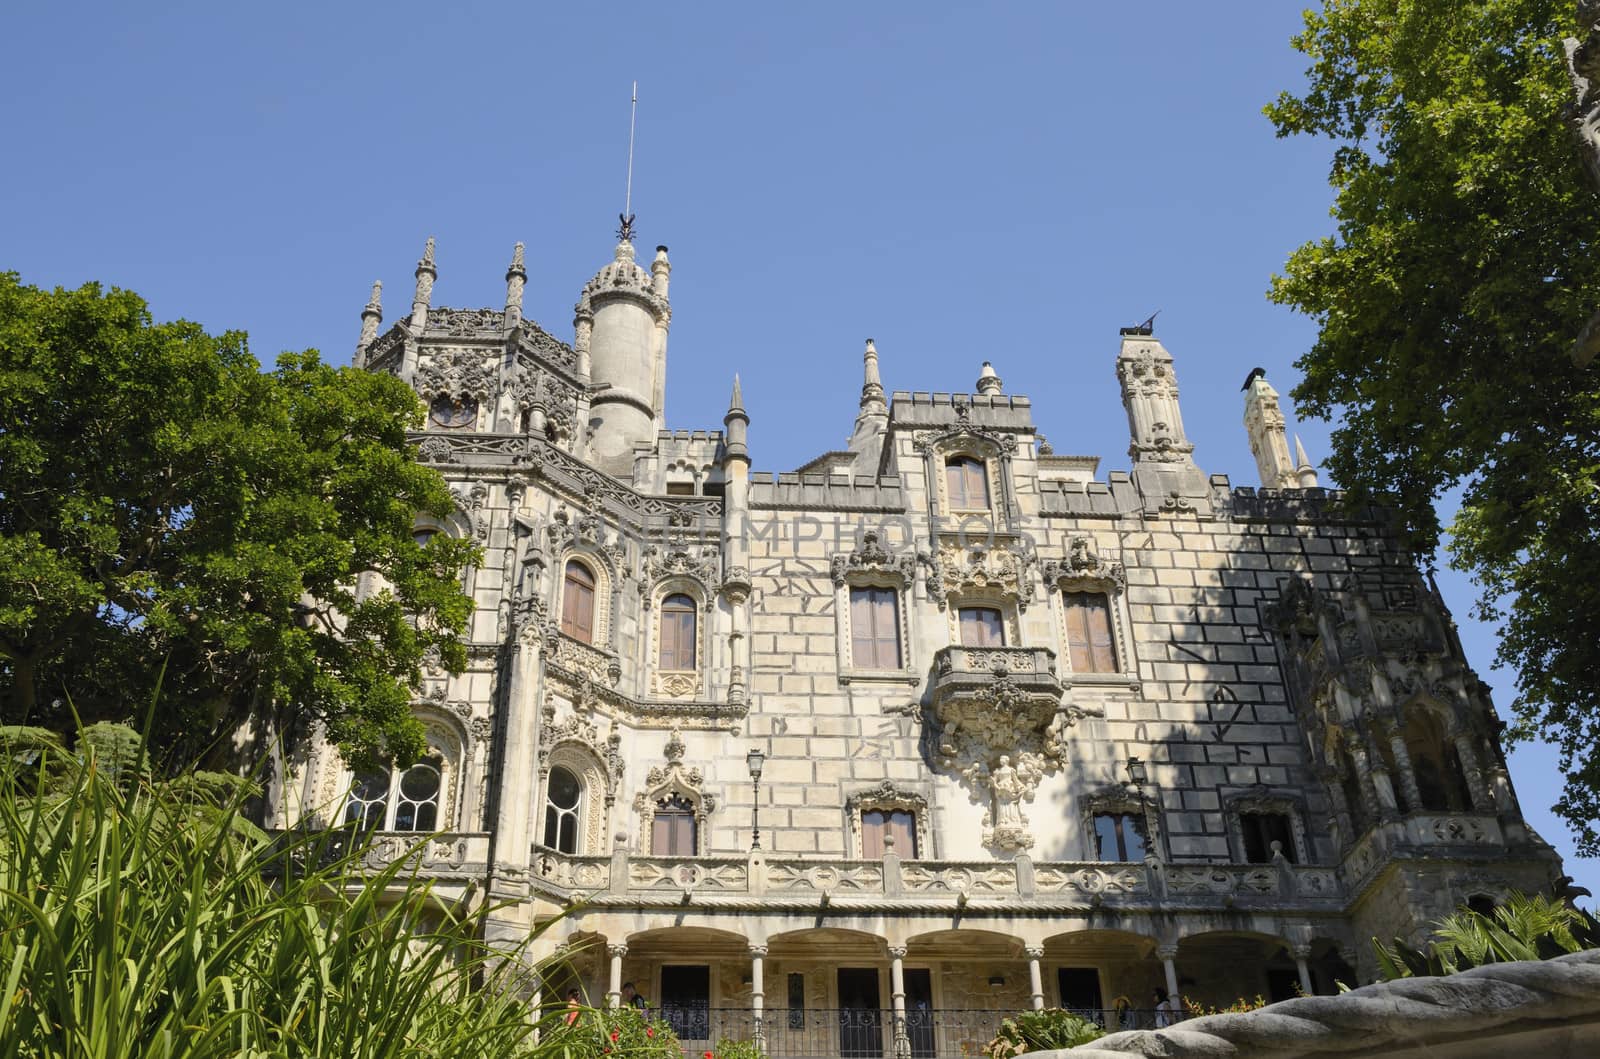 Quinta da Regaleira is an estate located near the historic center of Sintra, Portugal.